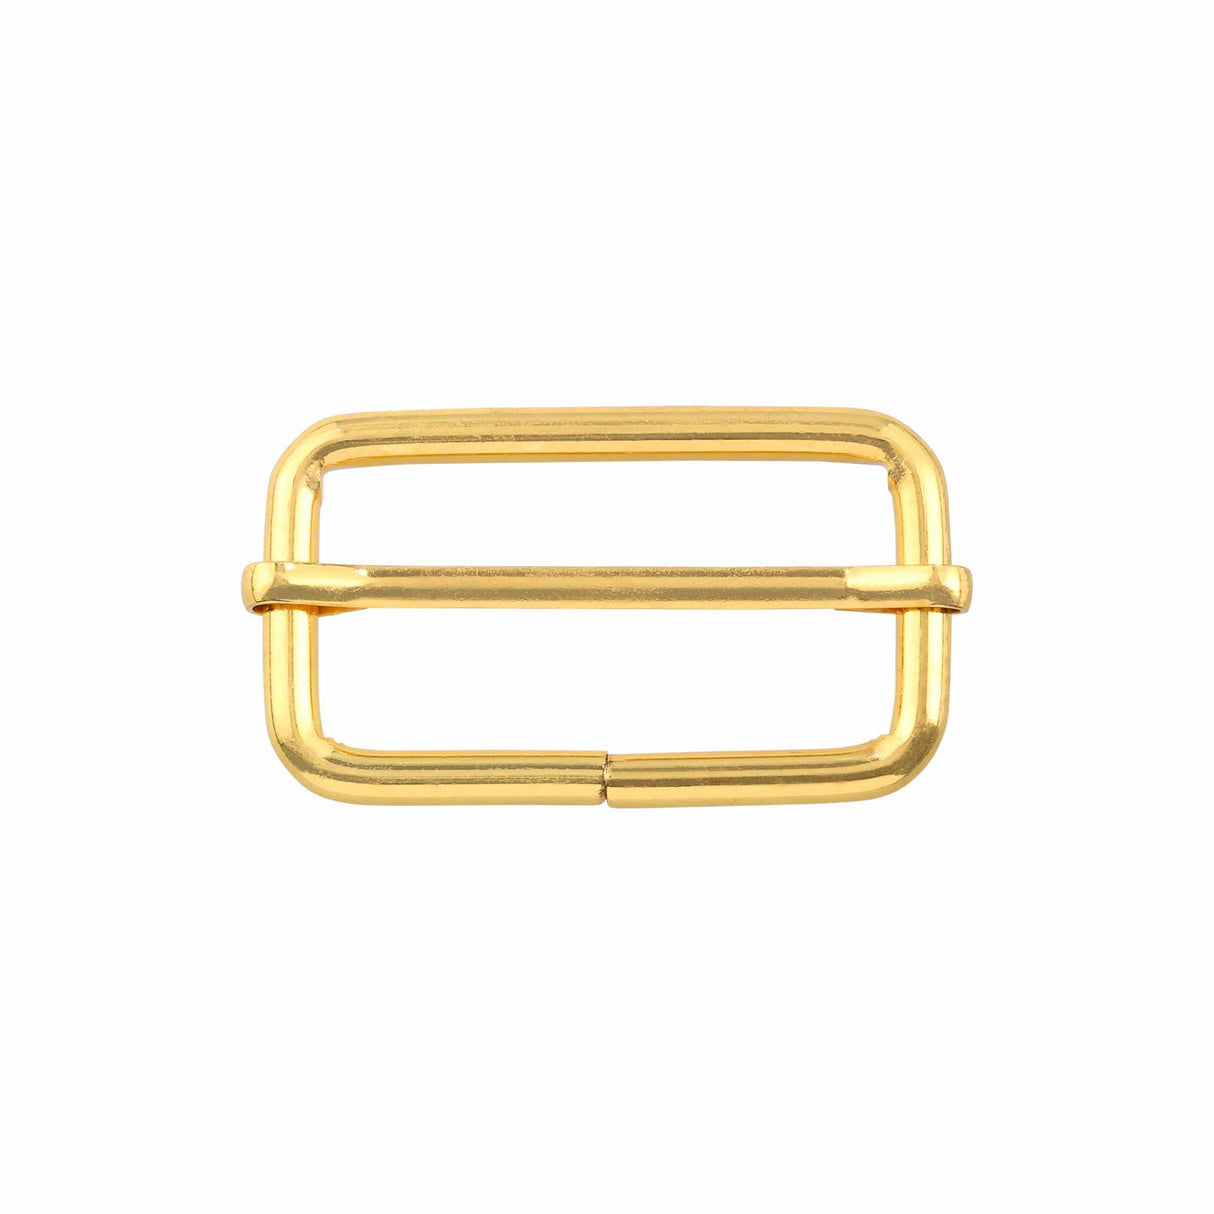 Ohio Travel Bag 1 1/2" Gold, Split Strap Slide, Steel, #C-1662-GOLD C-1662-GOLD